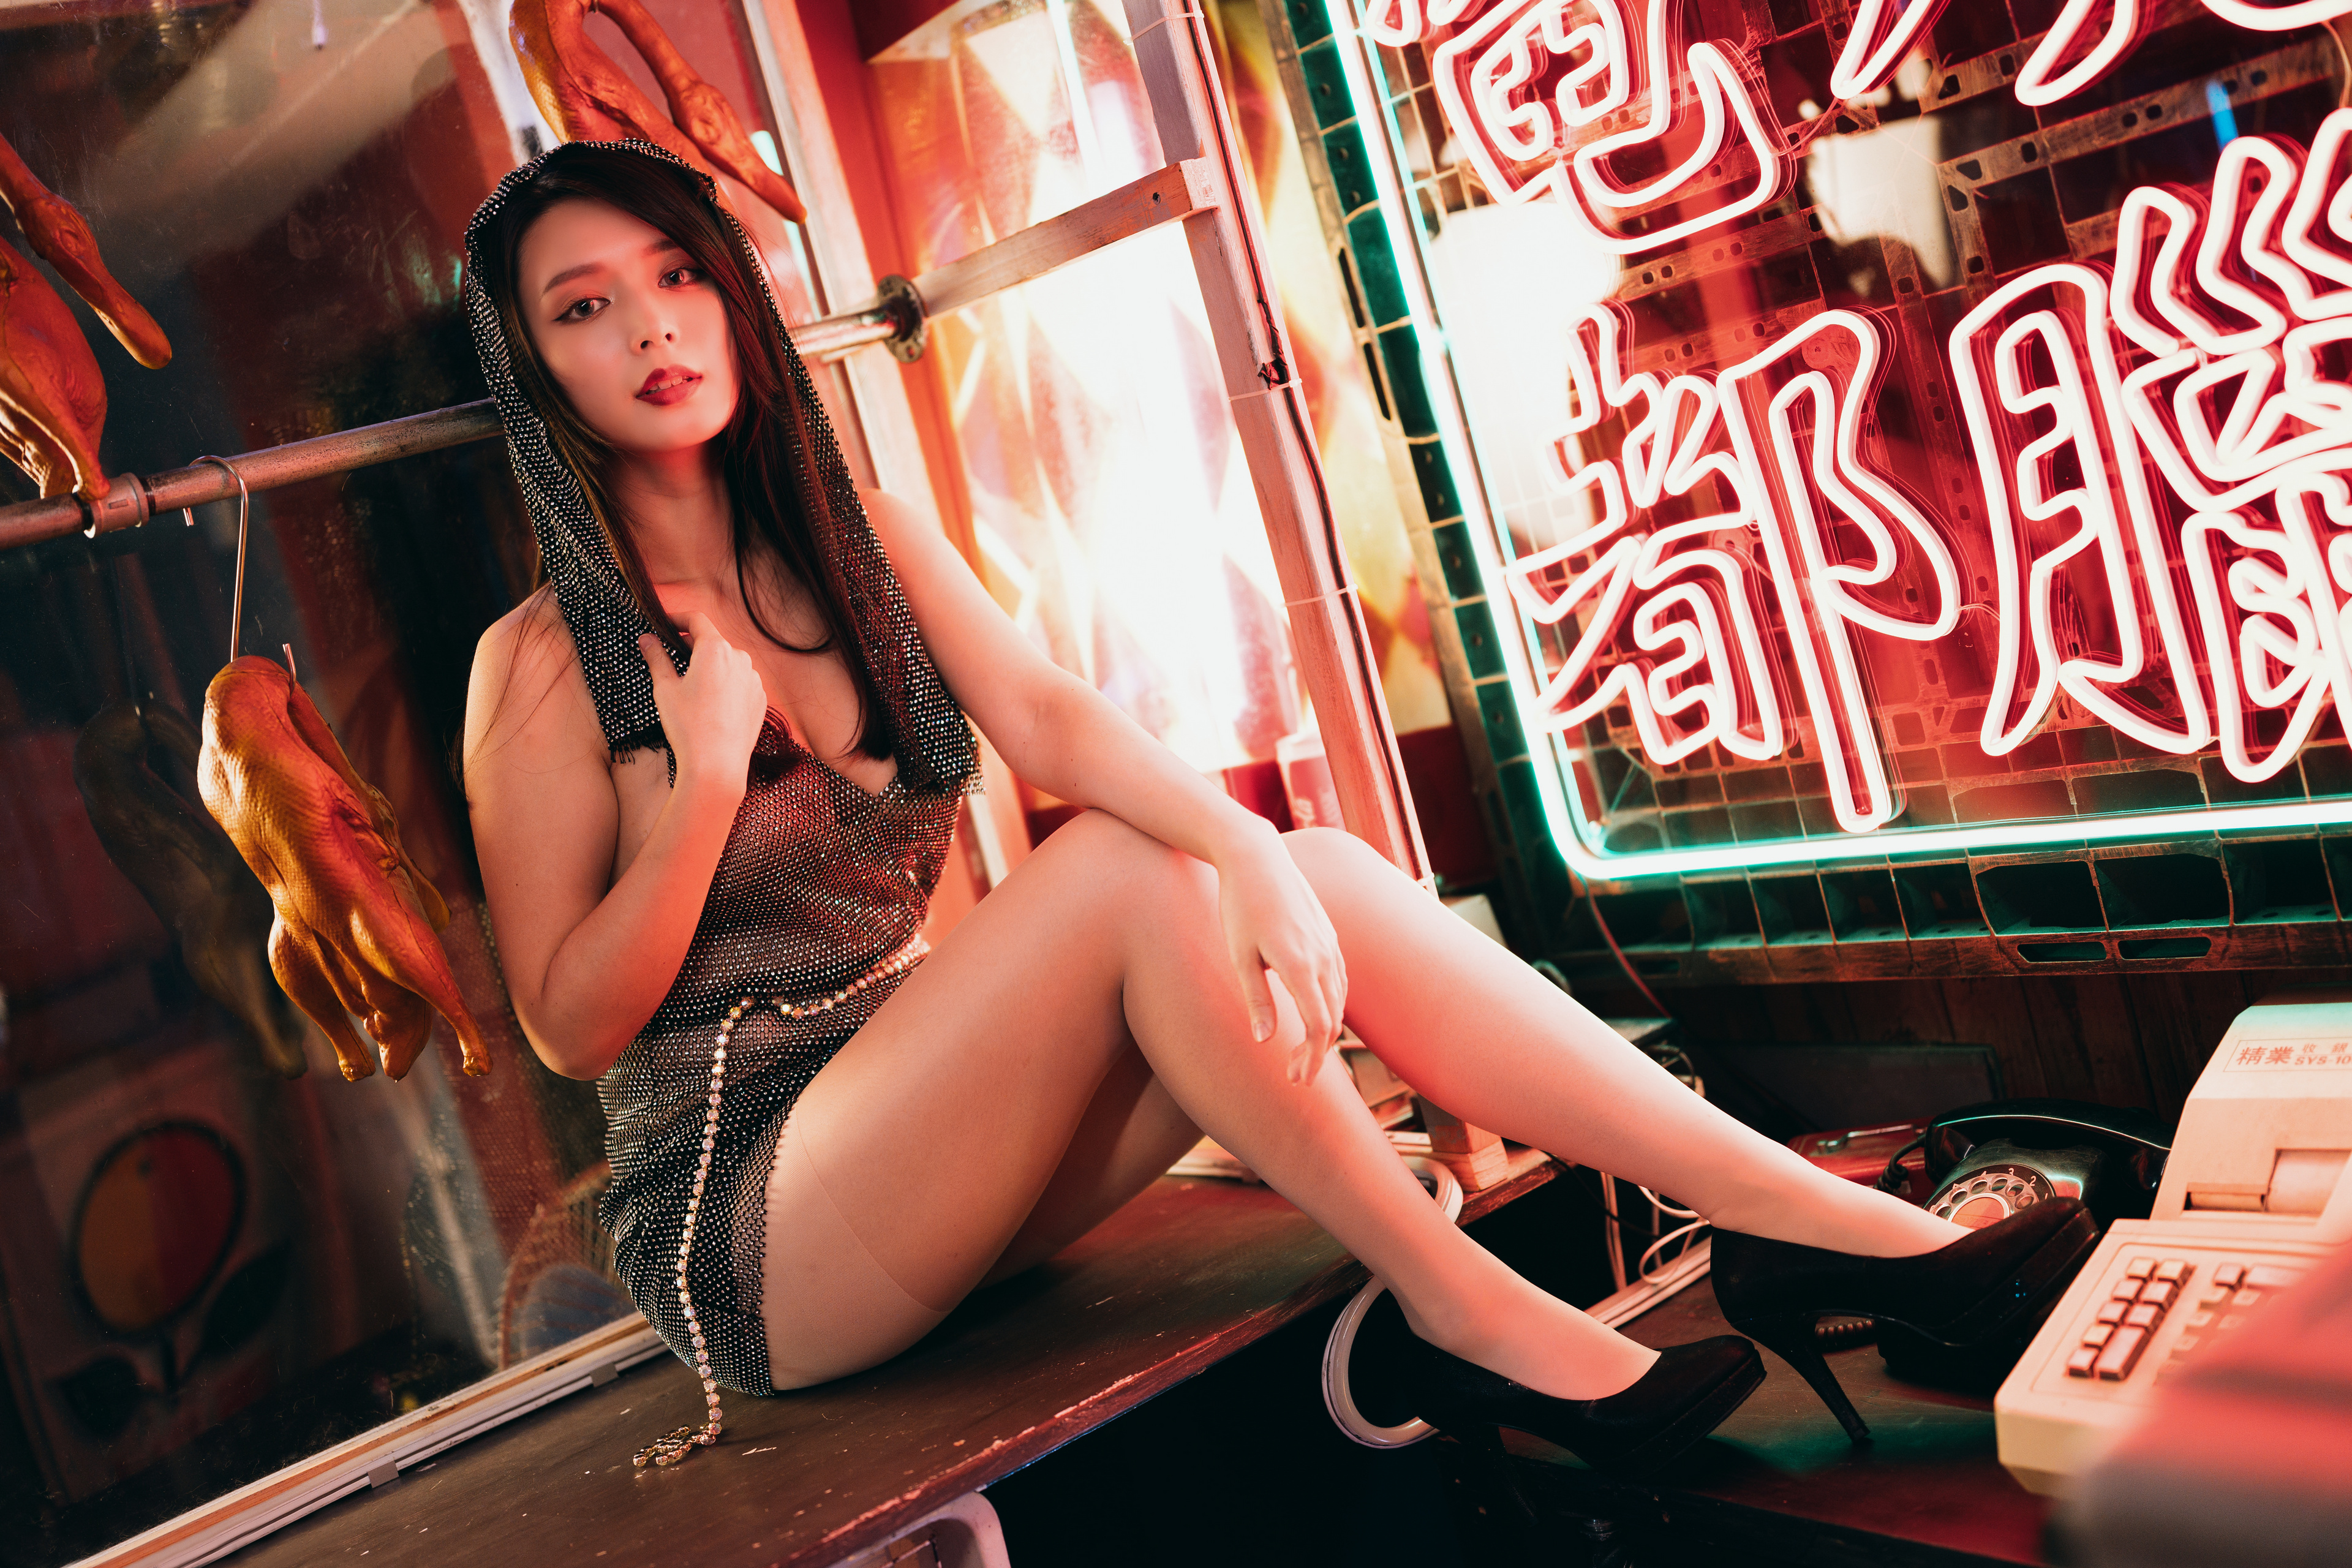 Asian Model Women Long Hair Dark Hair Sitting Black High Heels Telephone Neon Sign Duck Countertops 3840x2560